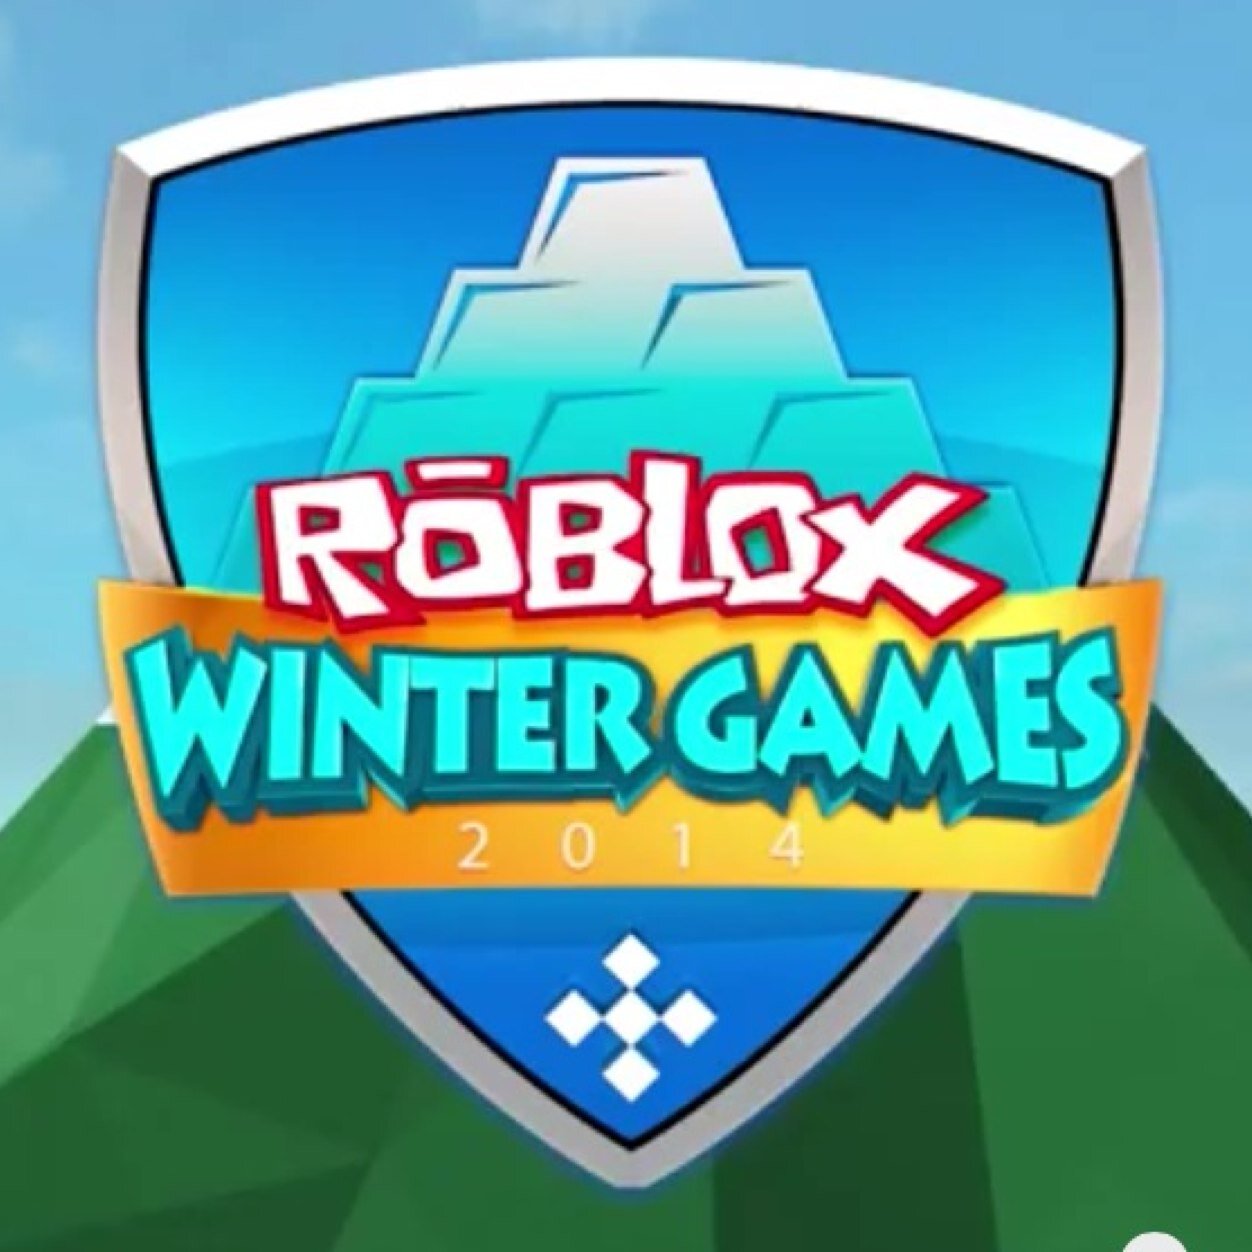 Roblox Winter Games Gamesrblx Twitter - roblox winter games 2014 silver trophy roblox